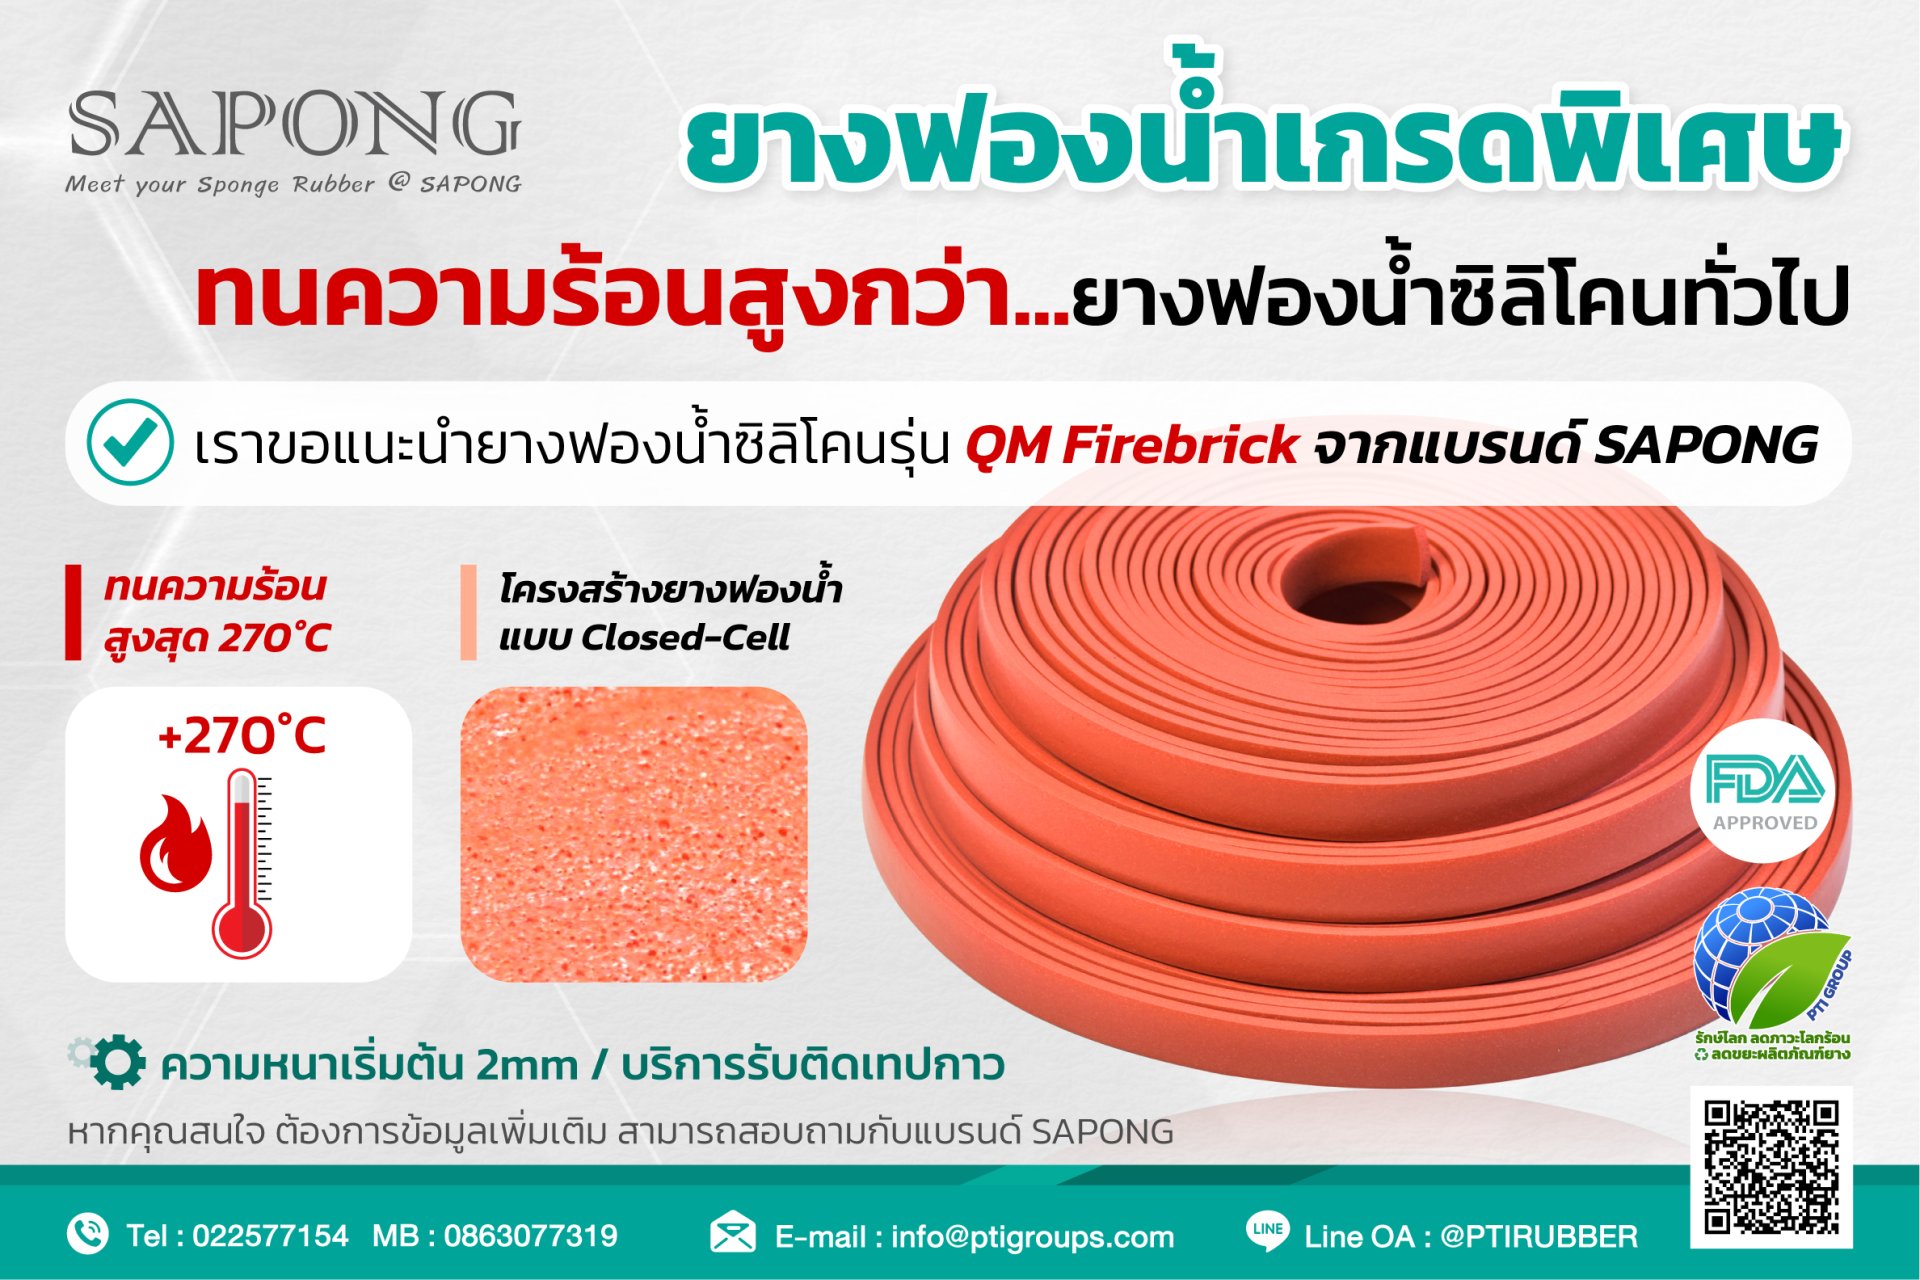 Special grade sponge rubber Higher heat resistance than general silicone sponge rubber.